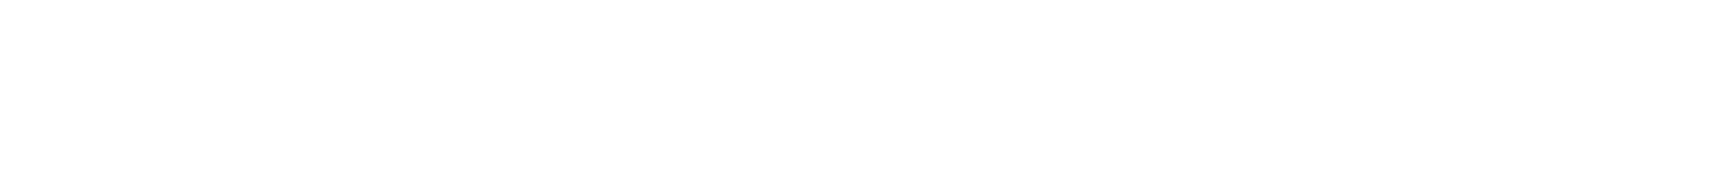 Bank of America  Logo groß für dunkle Hintergründe (transparentes PNG)